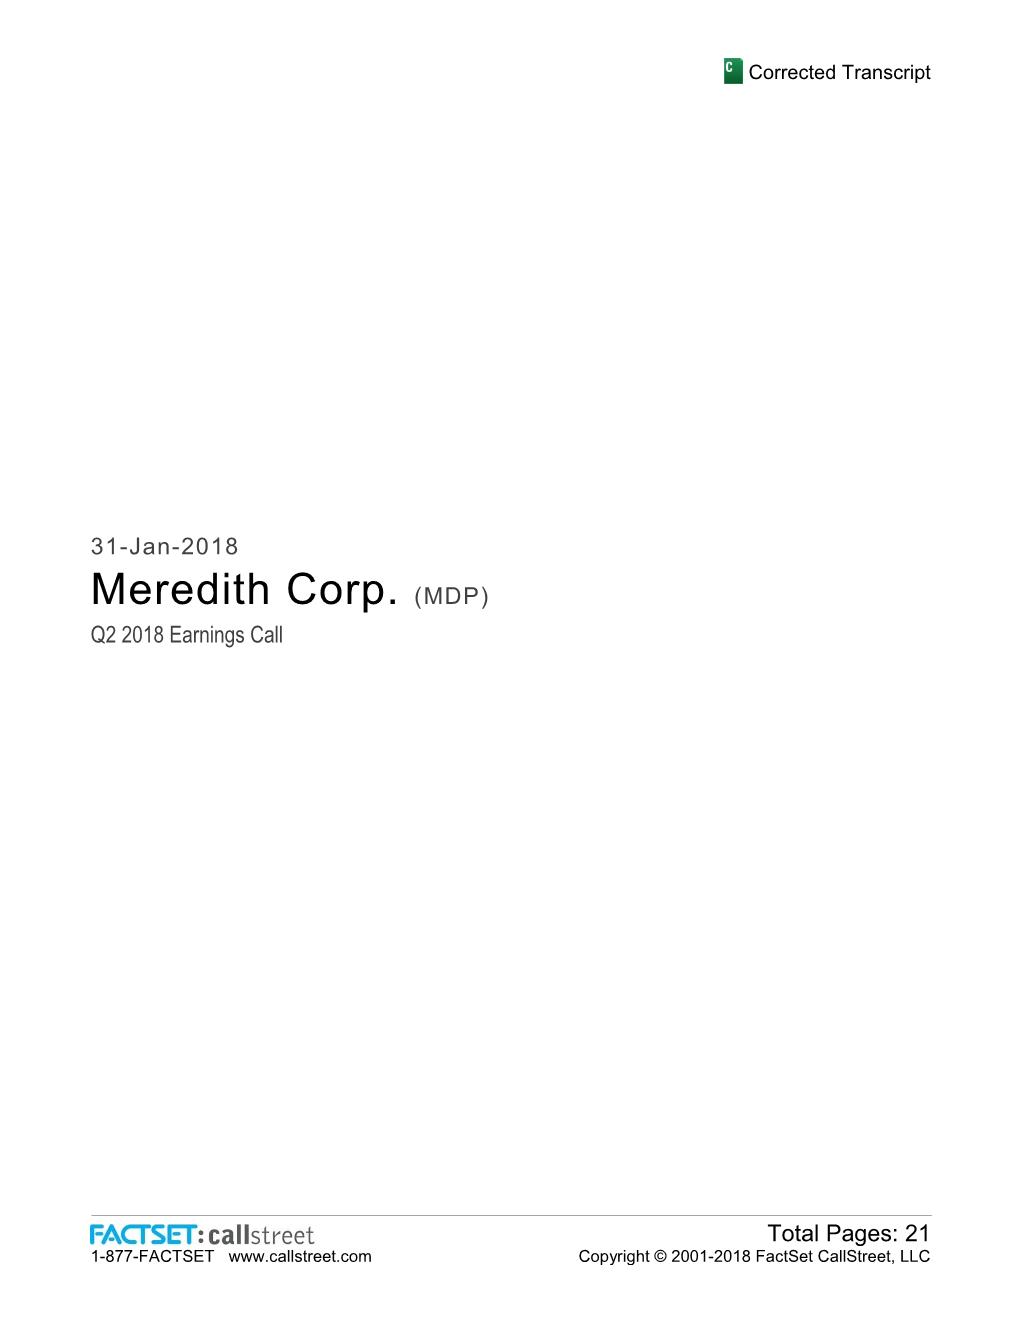 Meredith Corp. (MDP) Q2 2018 Earnings Call